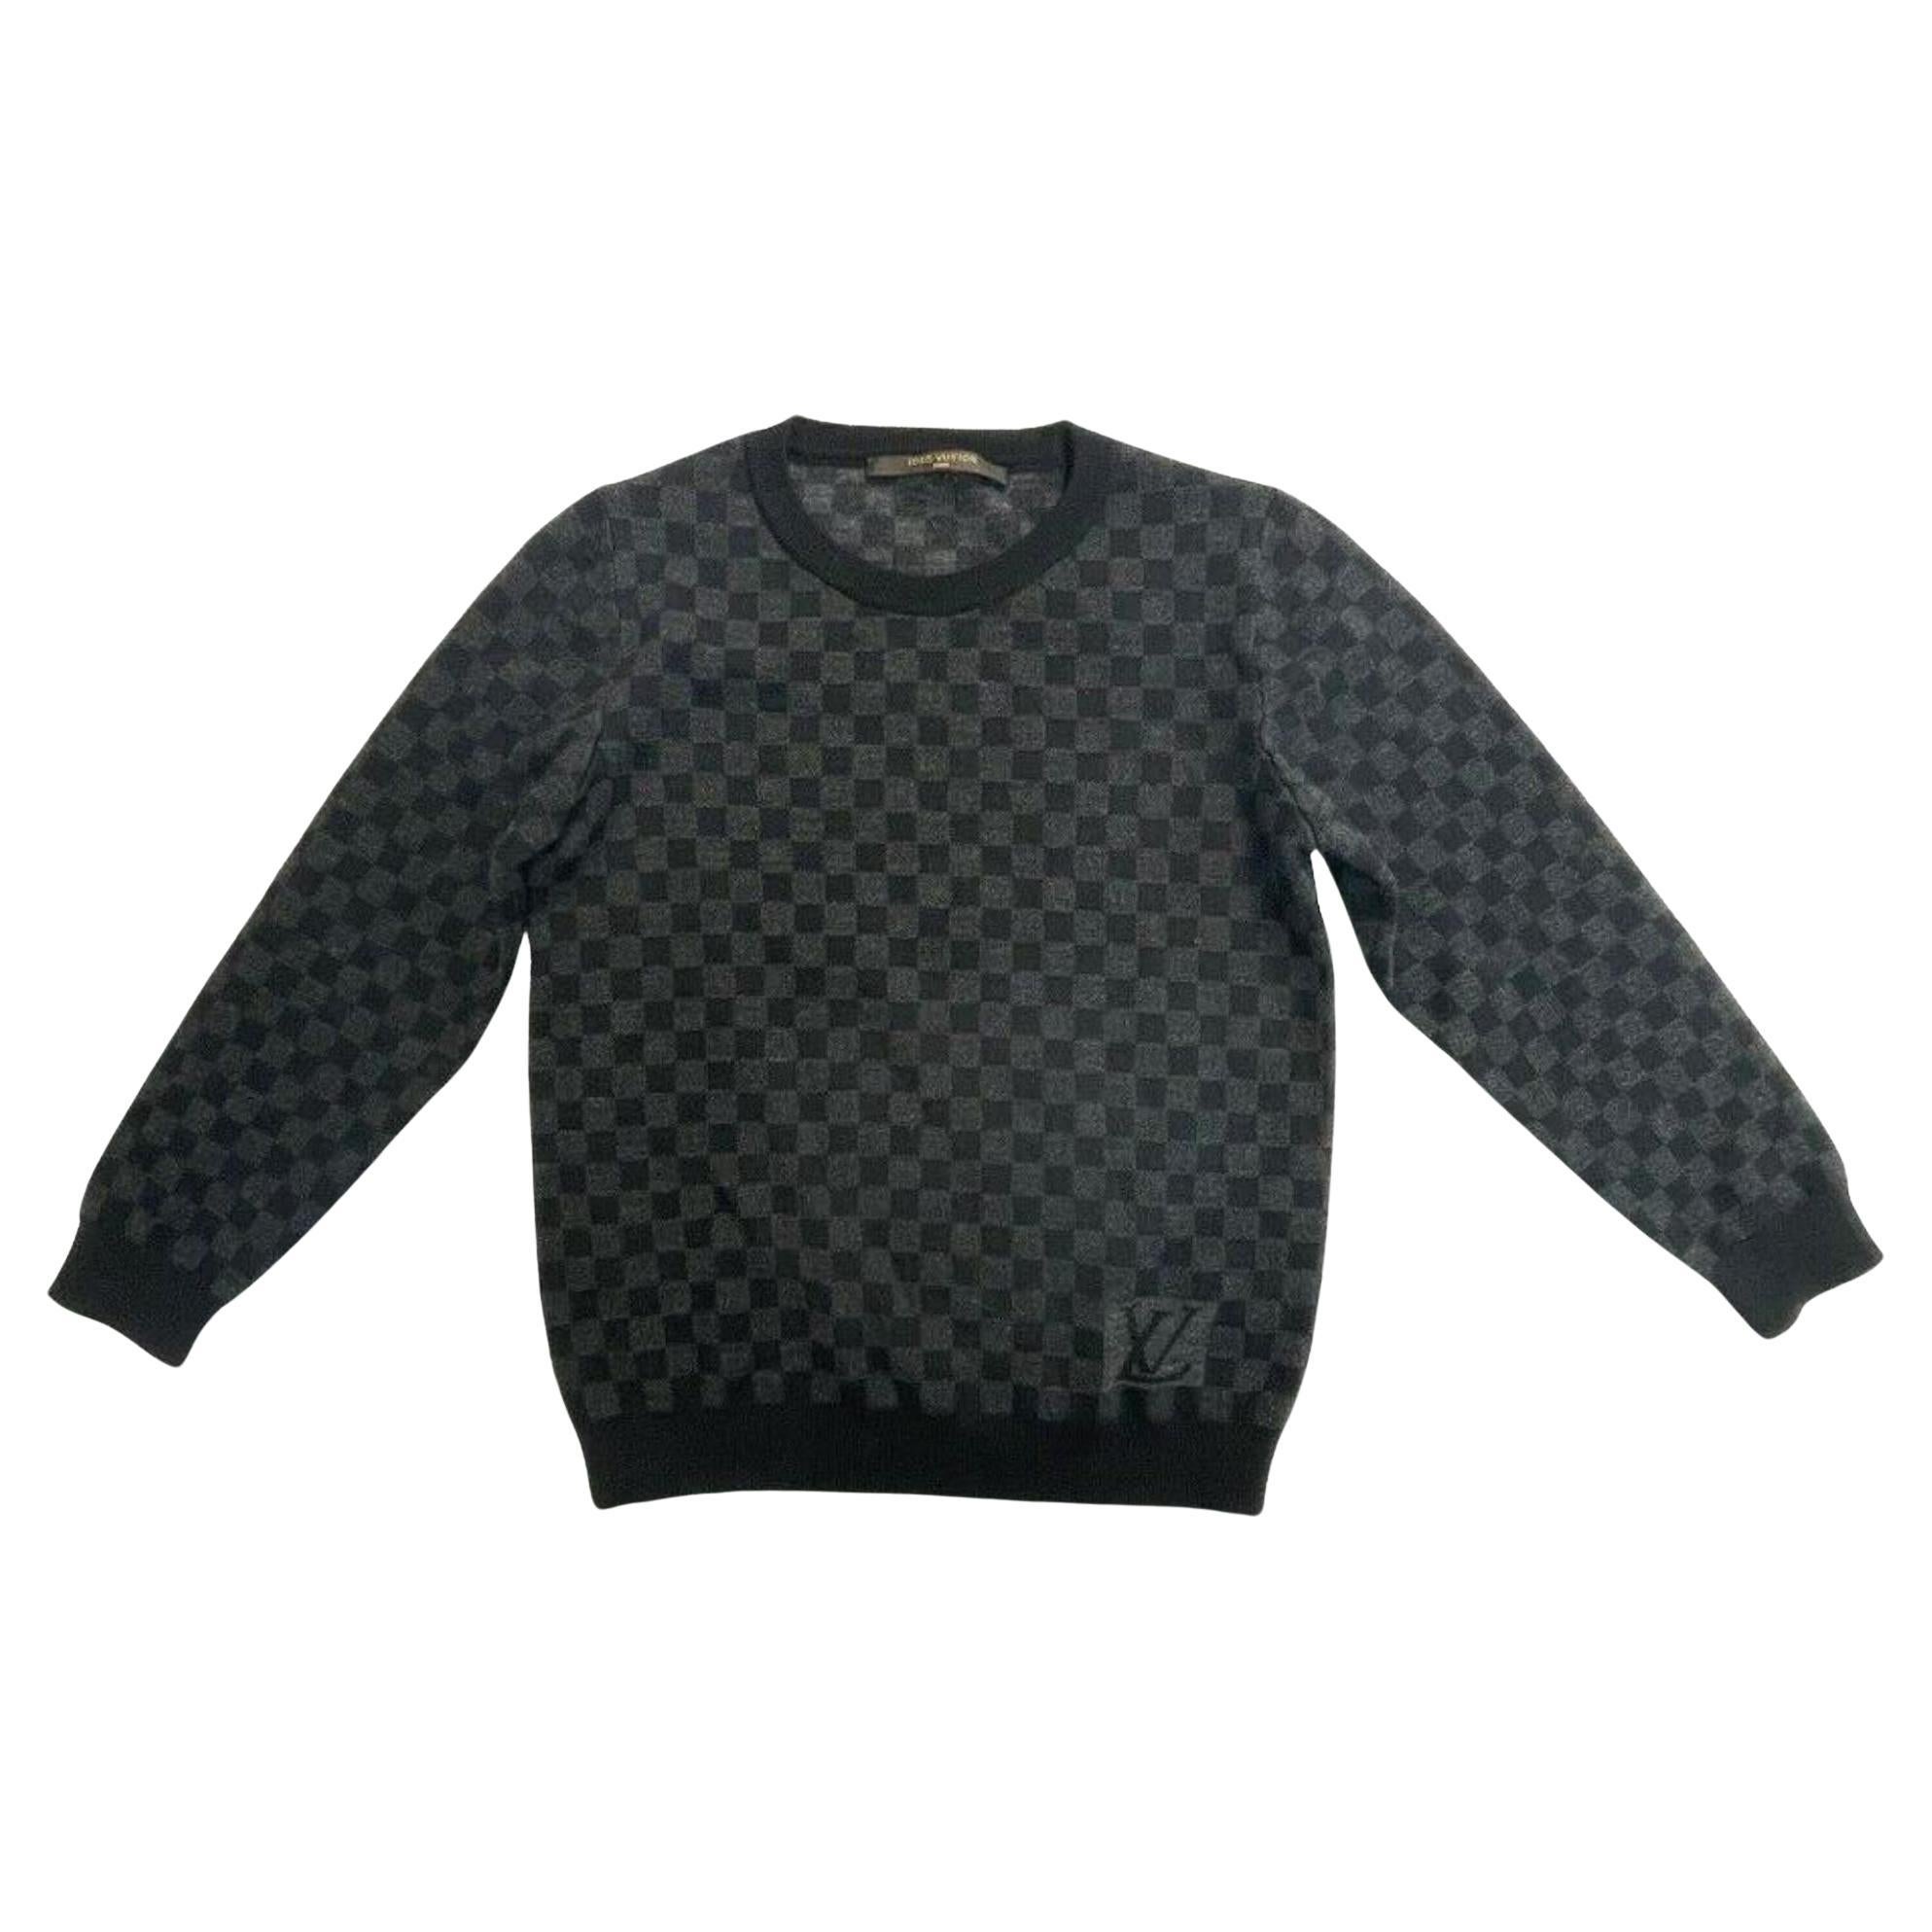 vuitton grey sweater